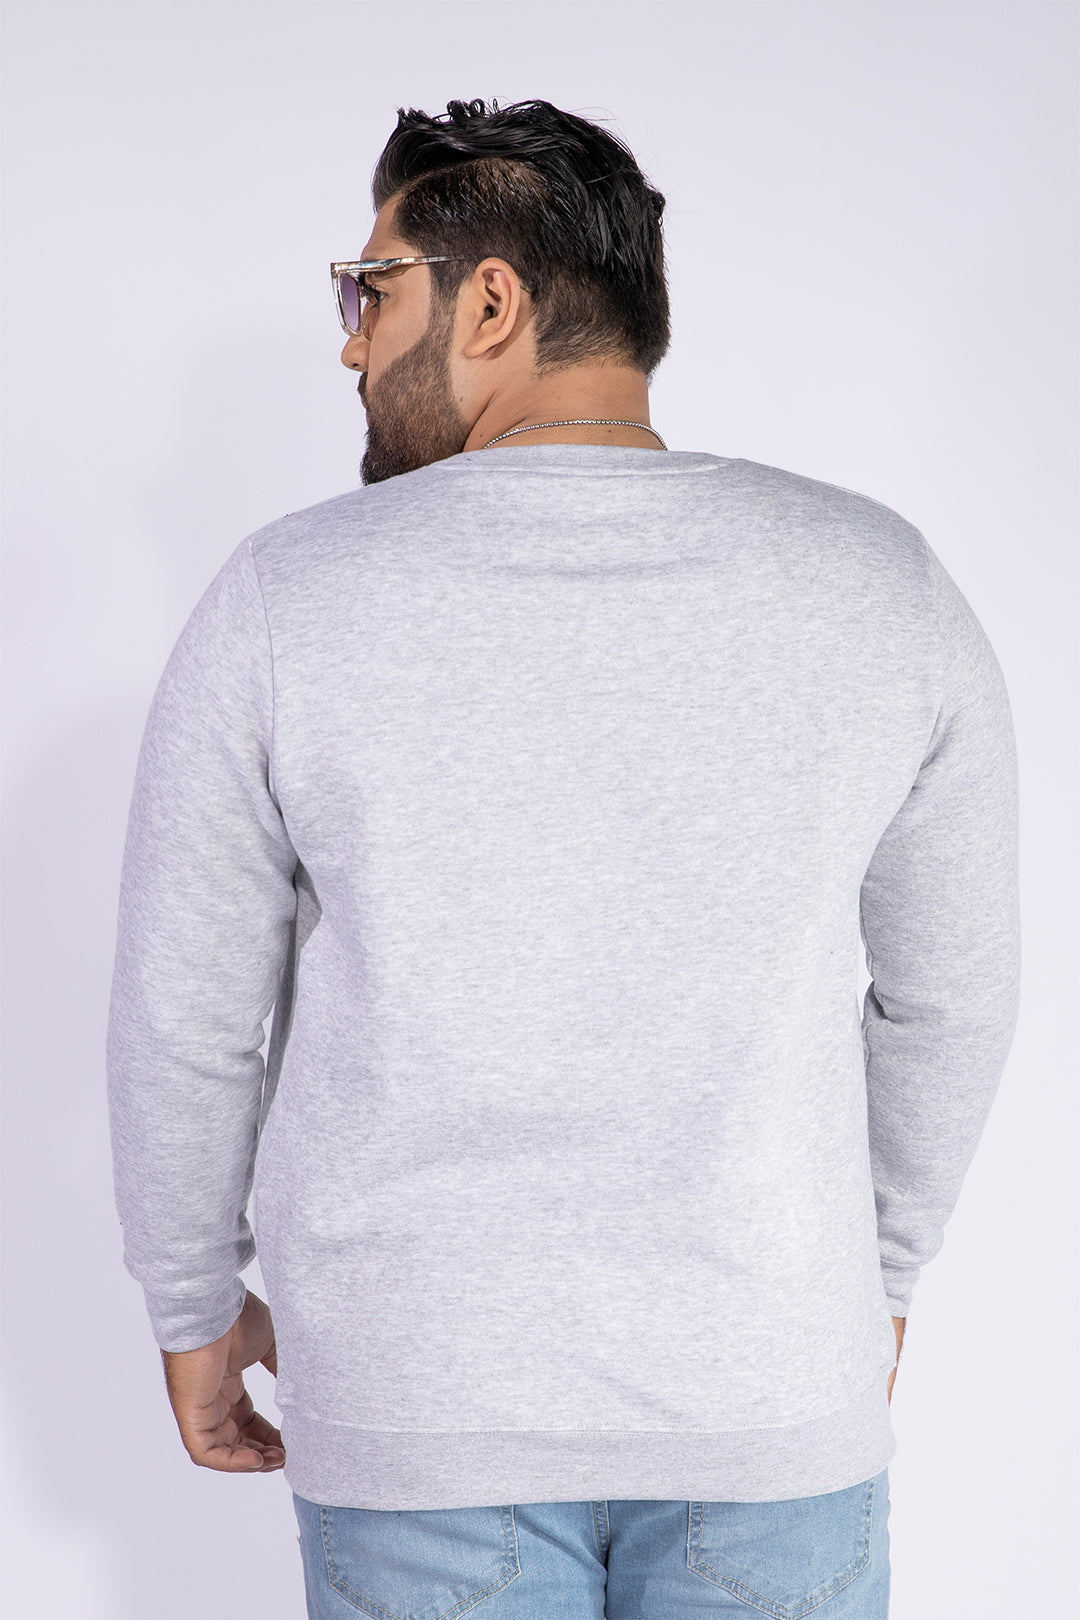 Rare Embroidered Grey Sweatshirt (Plus Size) - W21 - MSW031P